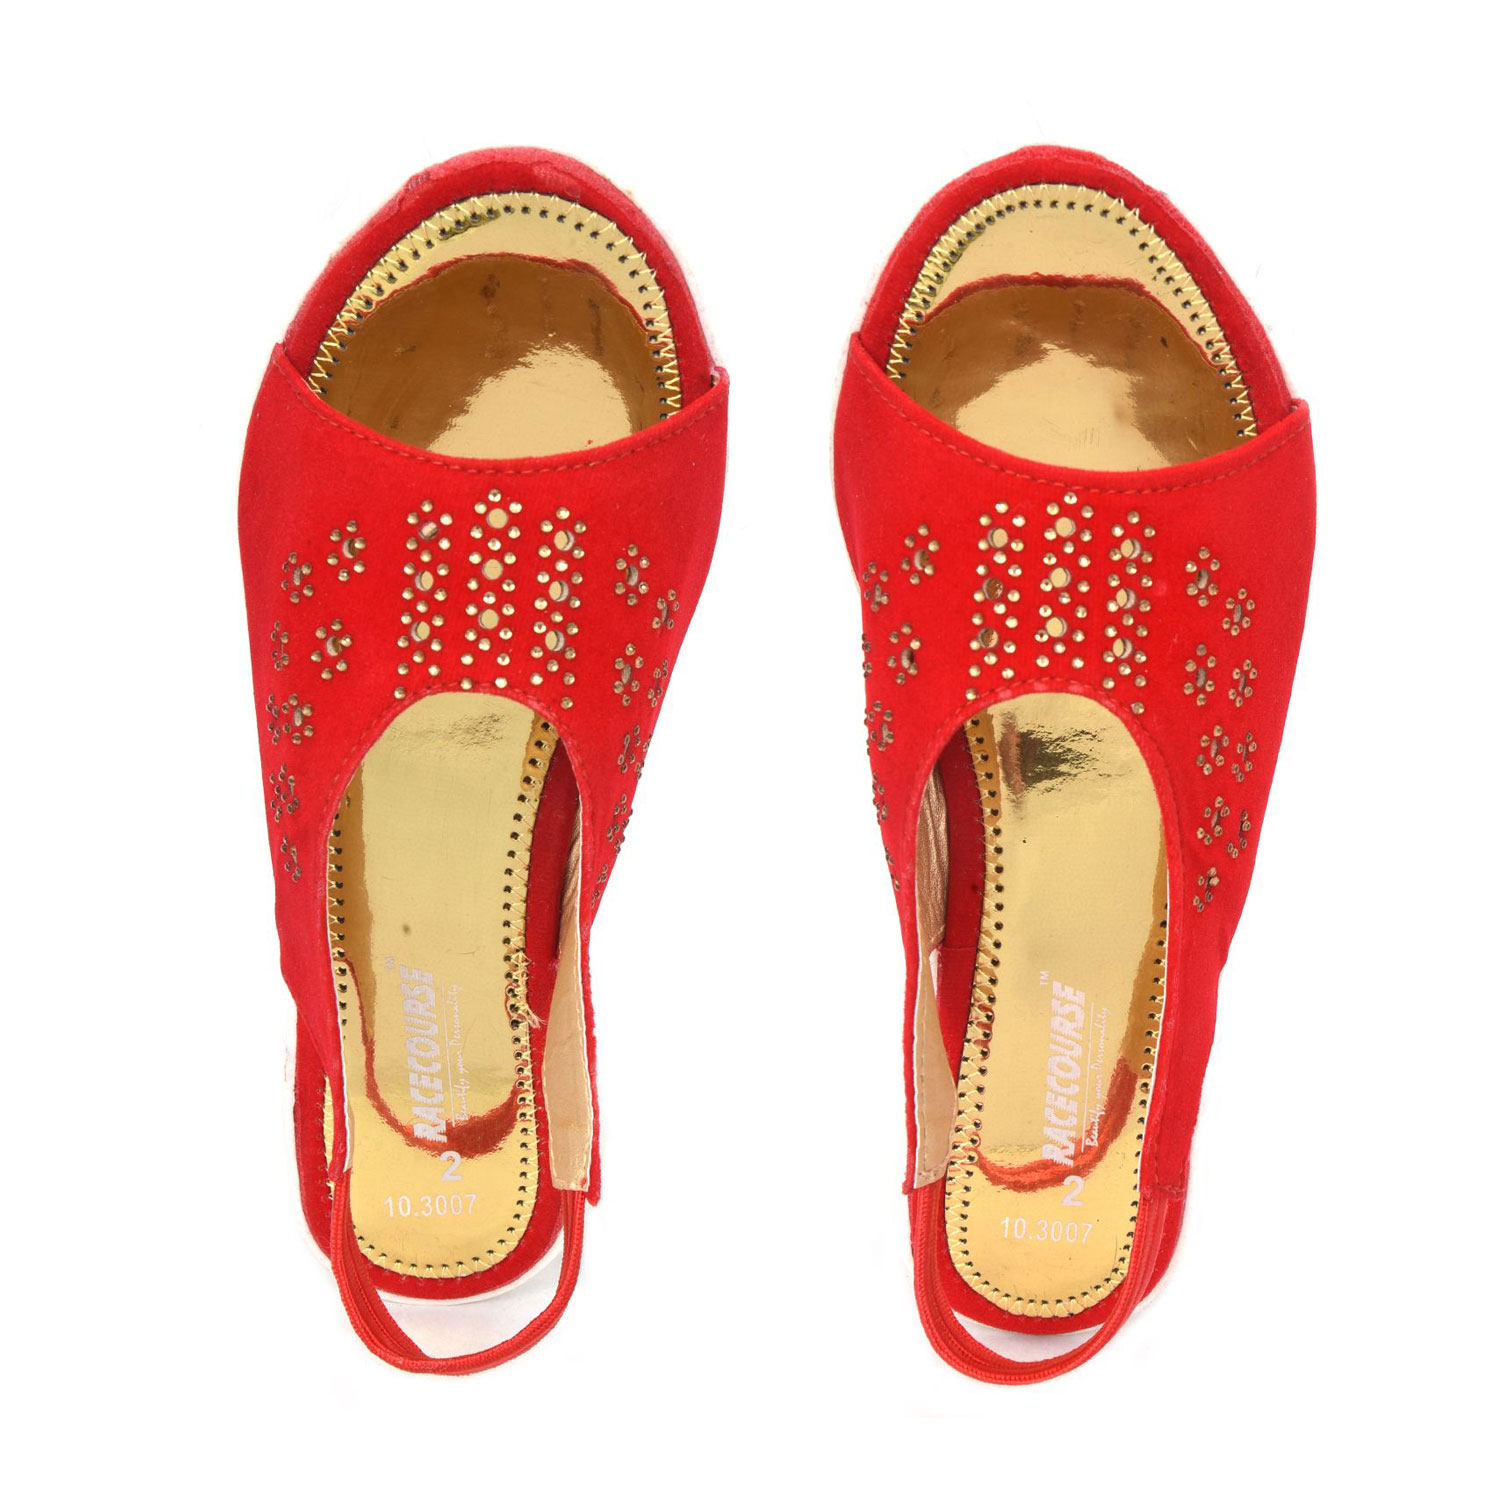 Racecourse Girl's Wedges Heel Velvet Embossed Bantu News Sandal With the Heel Height of 1.5 Inch 3007 Red (Pack of 8)